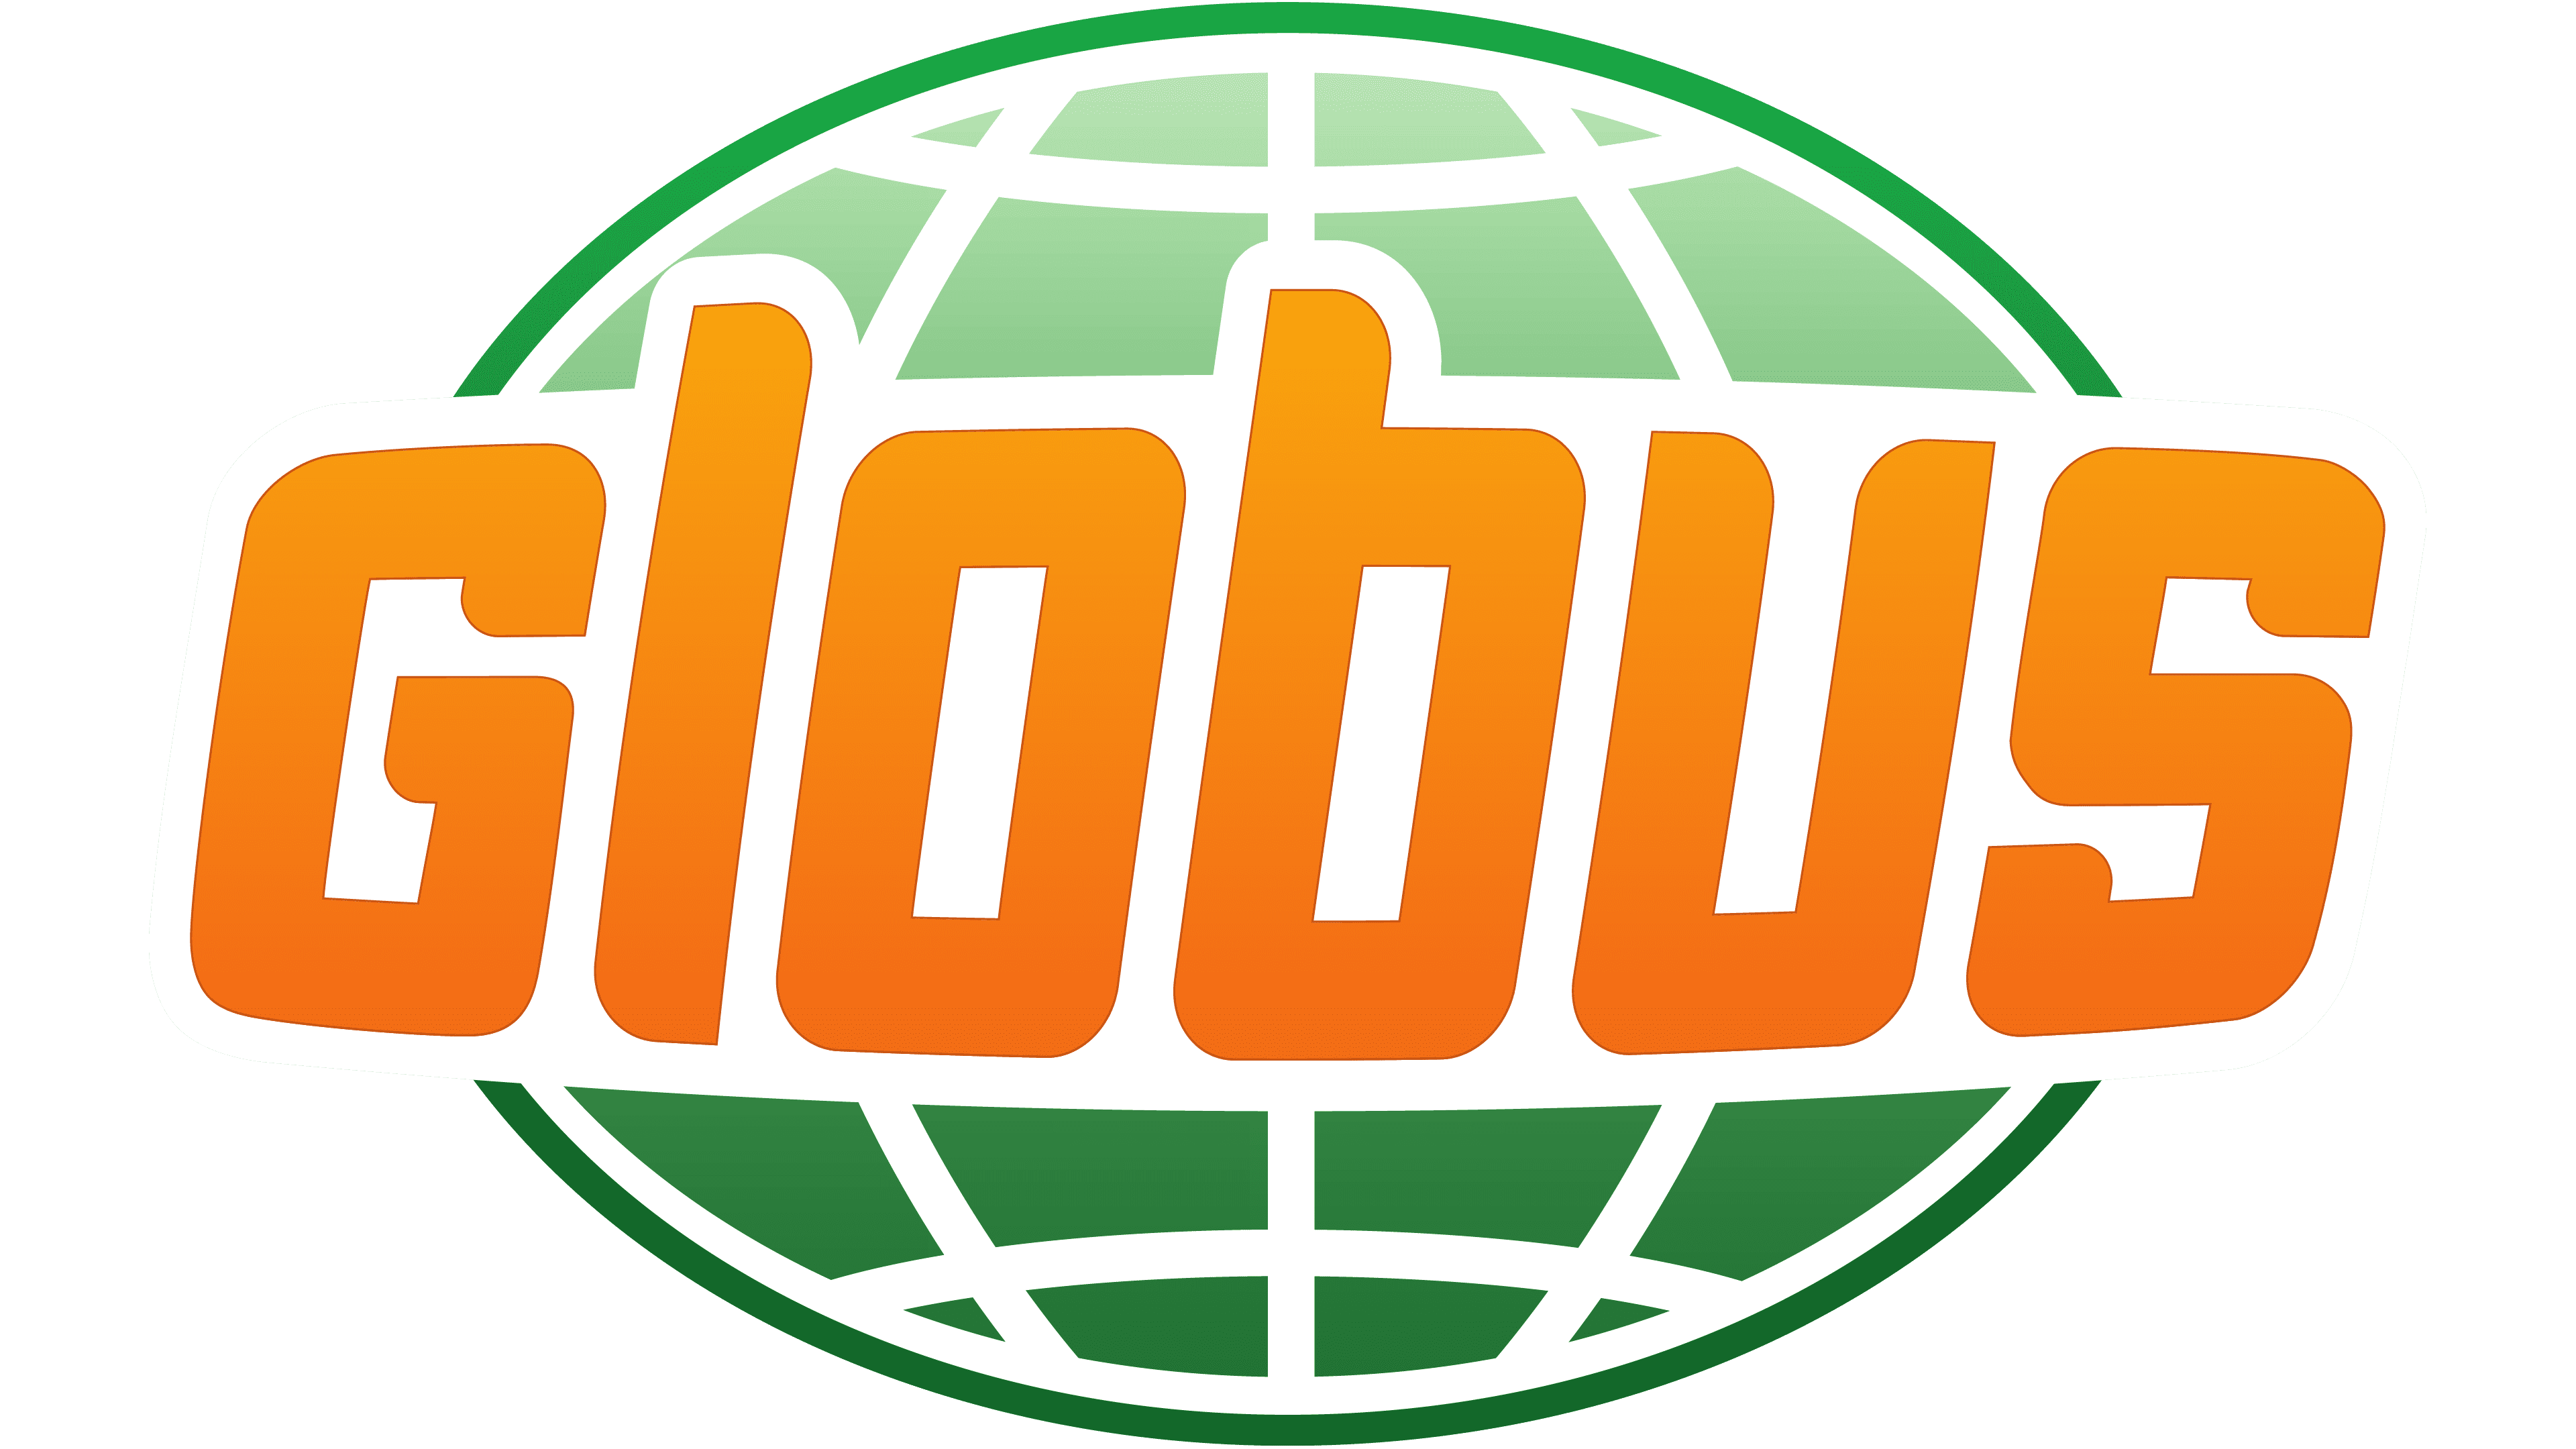 Globus and symbol, history,